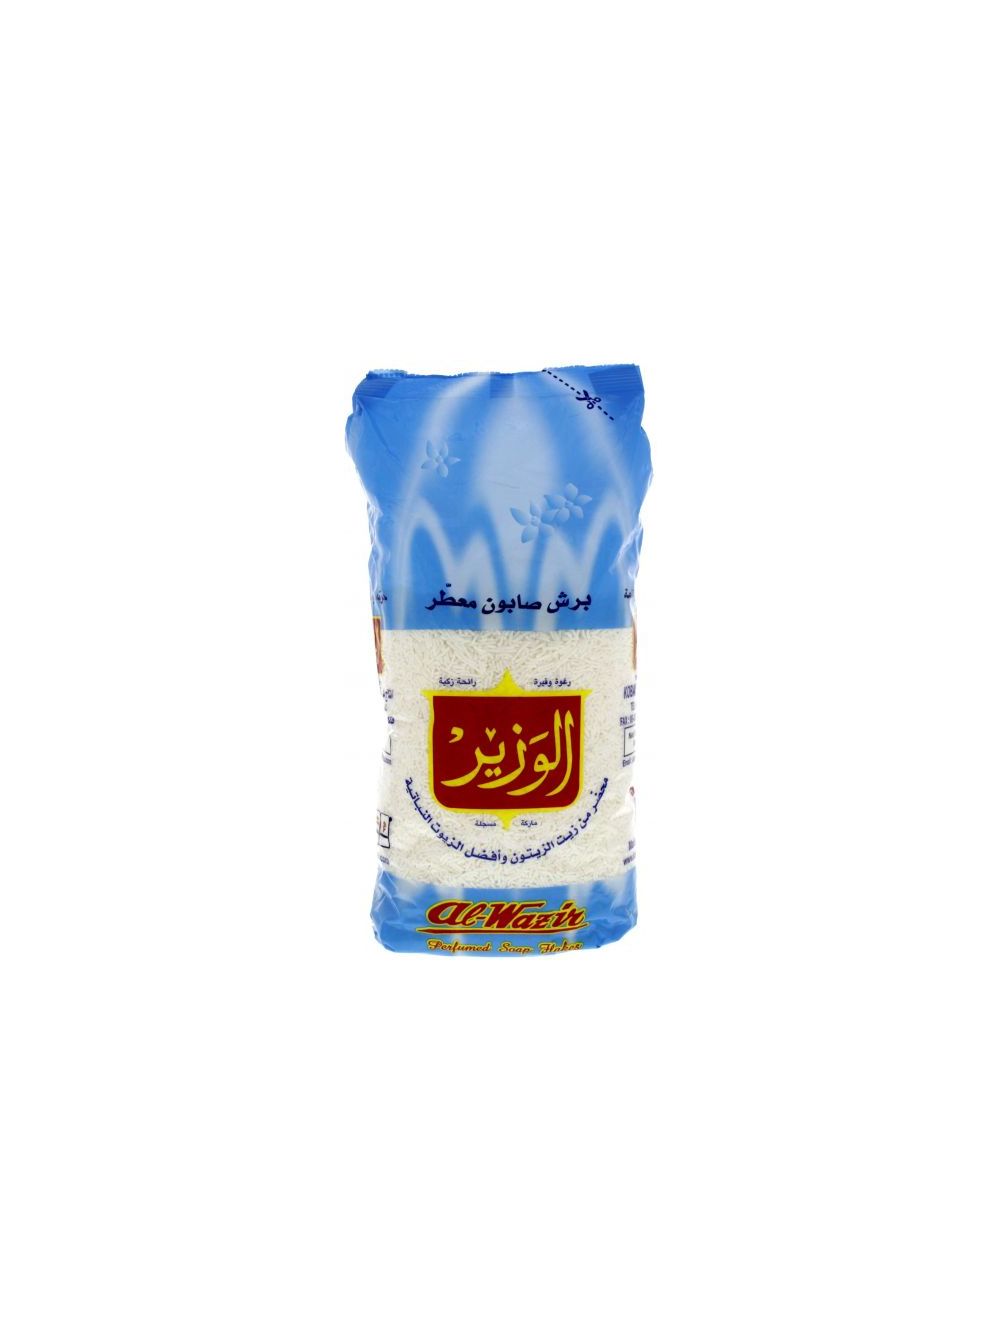 Al-Wazir Perfumed Soap Flakes 900 Gm - 1Pc